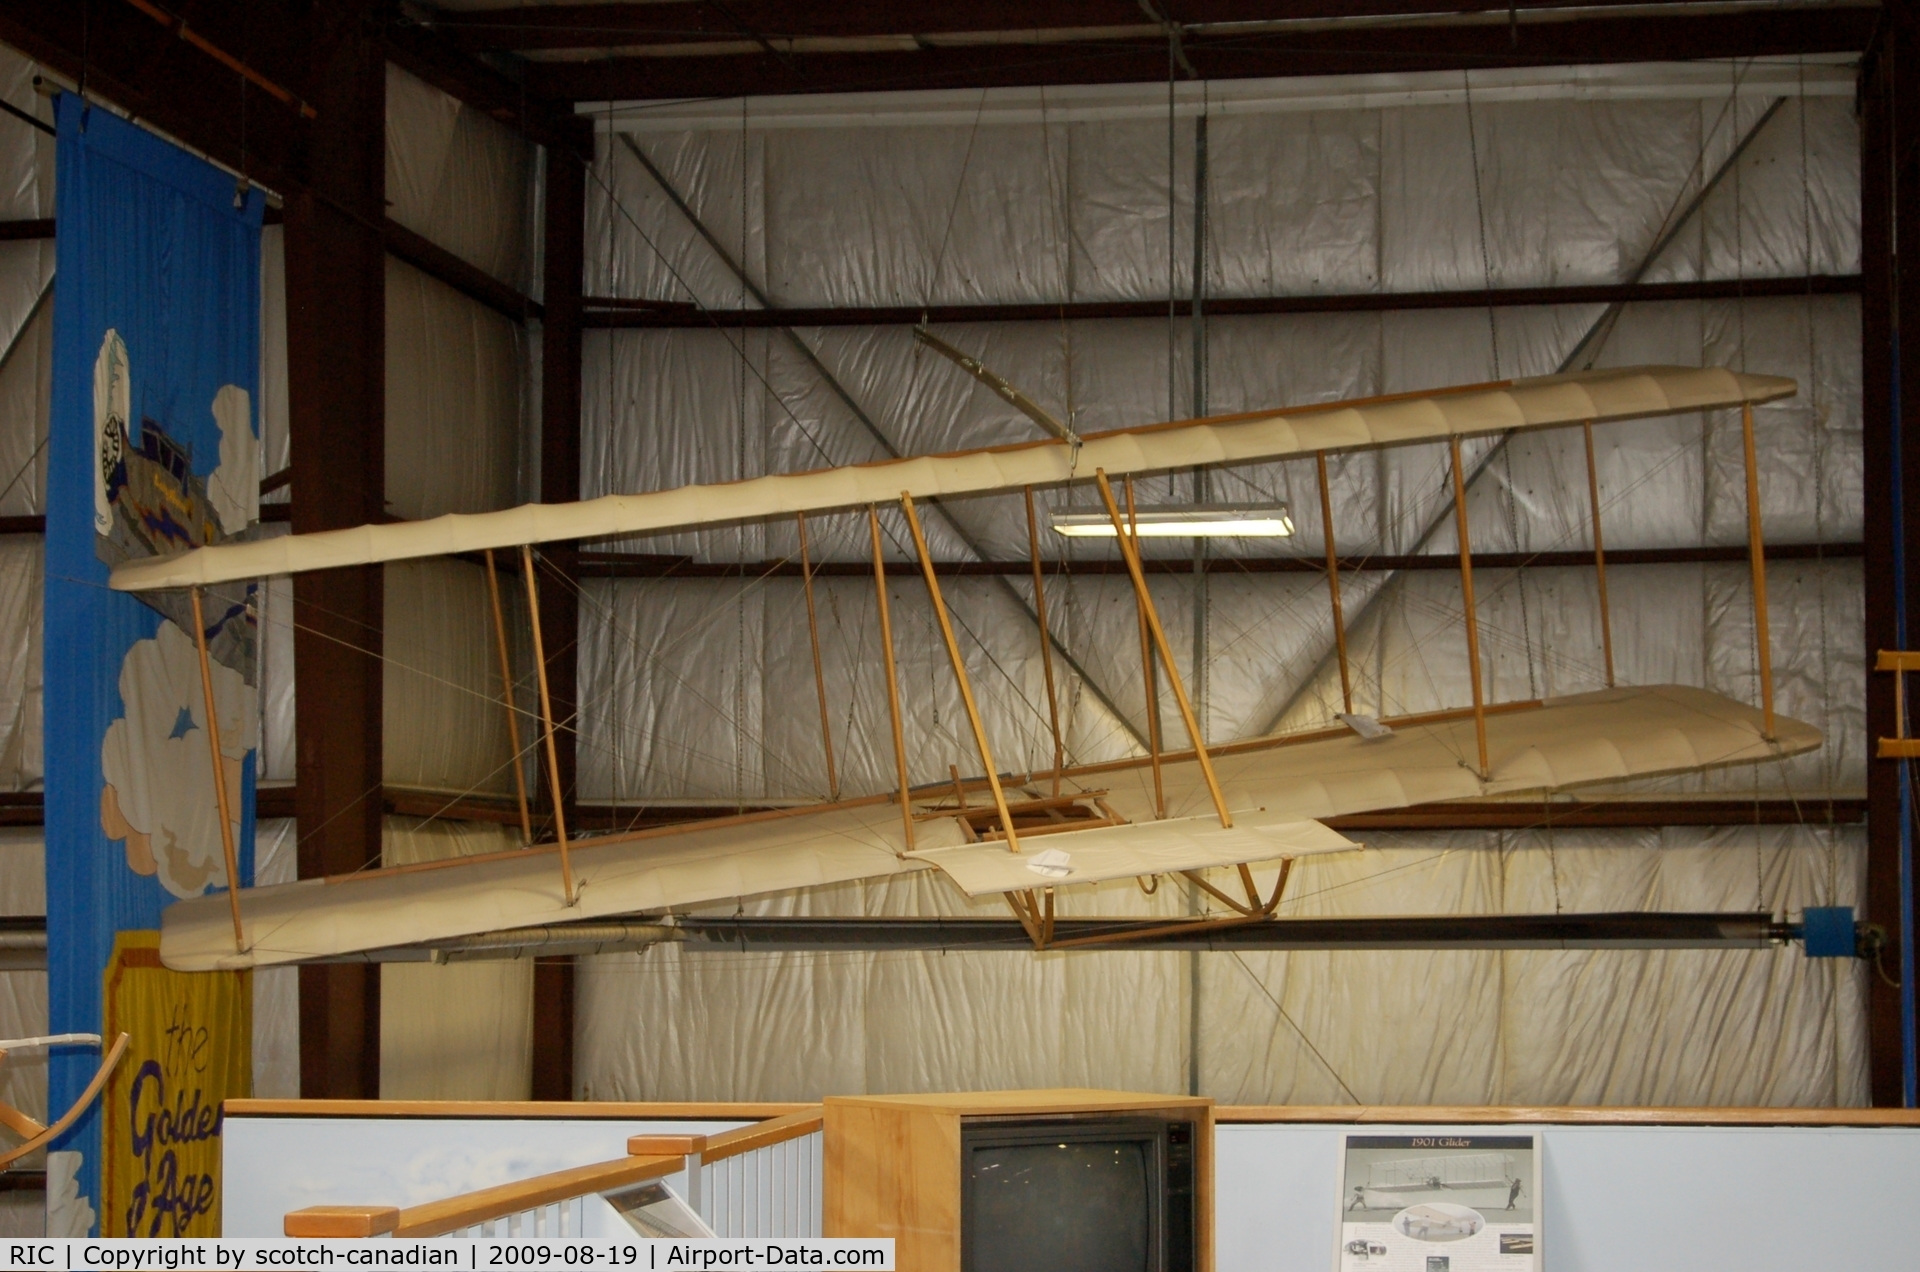 Richmond International Airport (RIC) - Wright Brothers 1901 Glider at the Virginia Aviation Museum, Richmond, VA